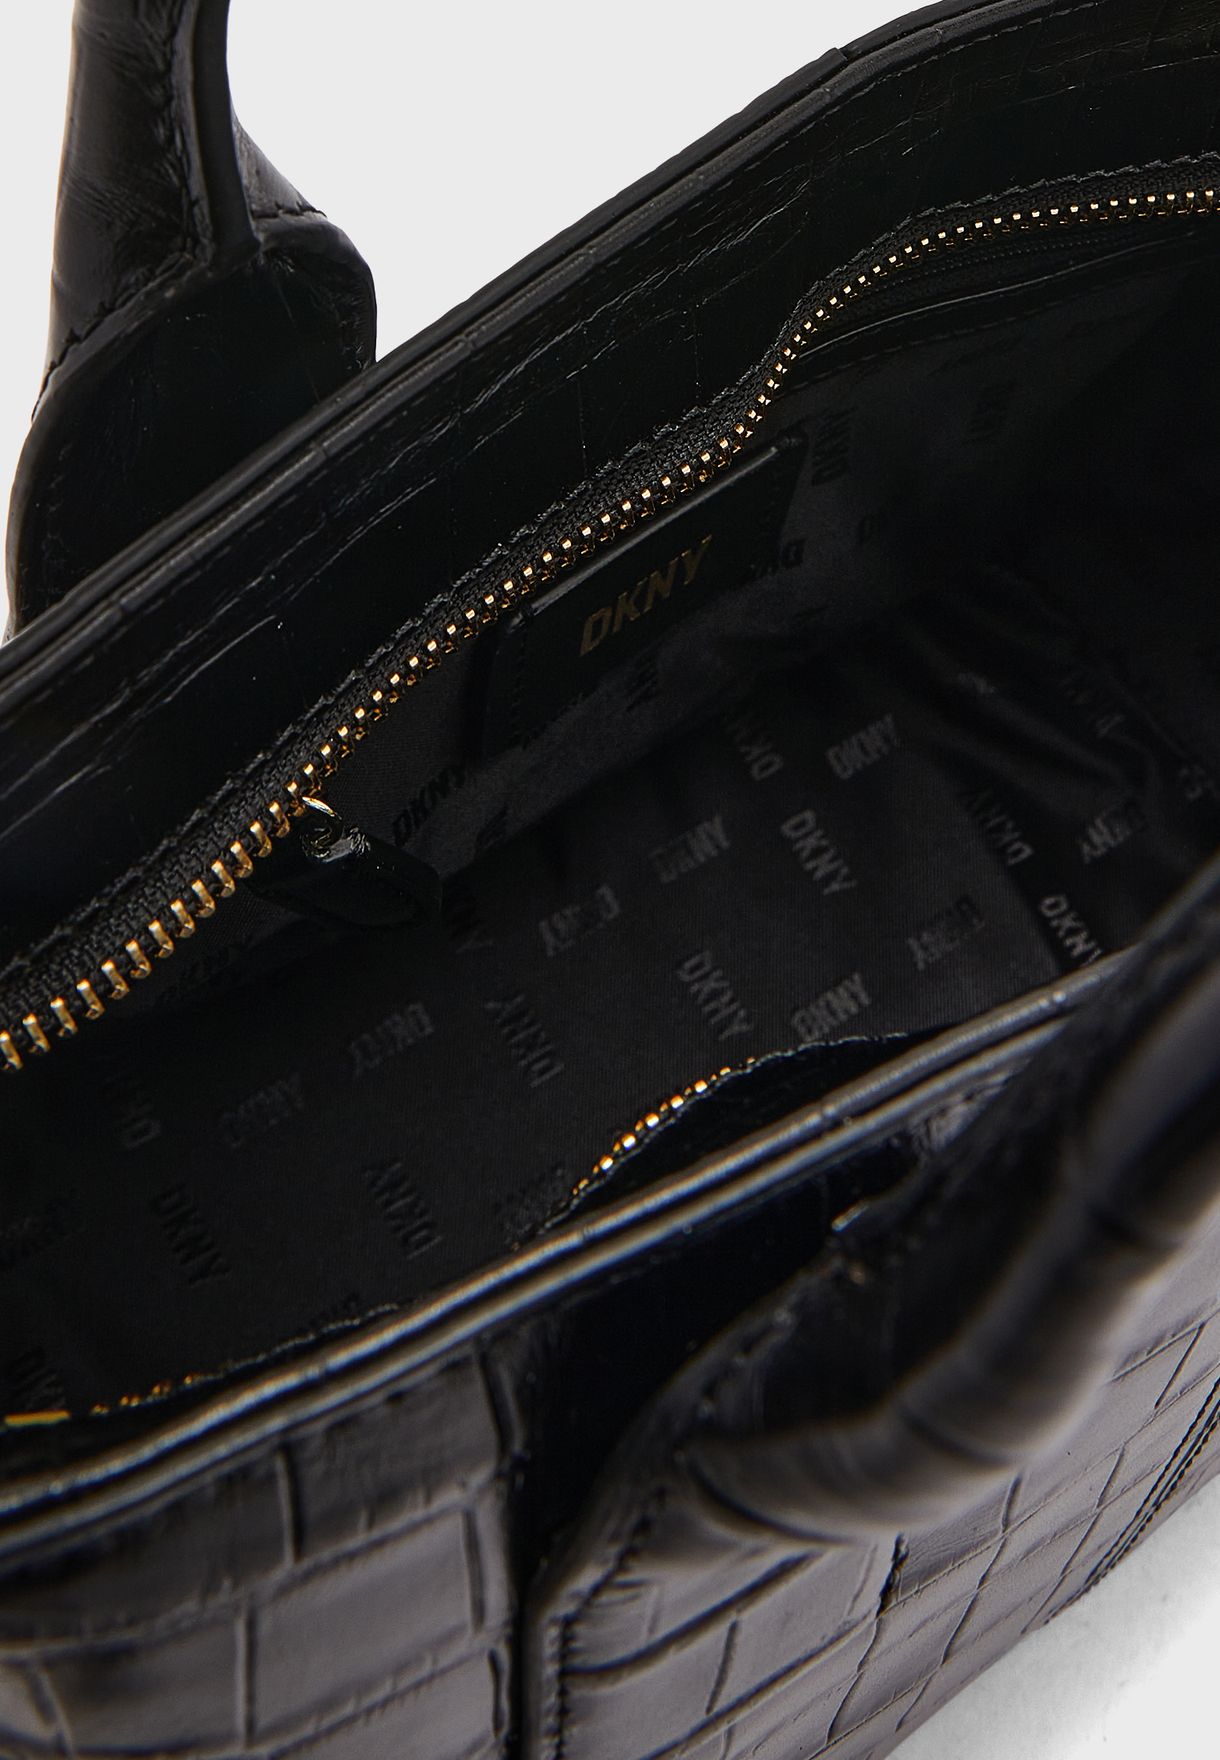 Olivia Croc Leather Satchel Bag